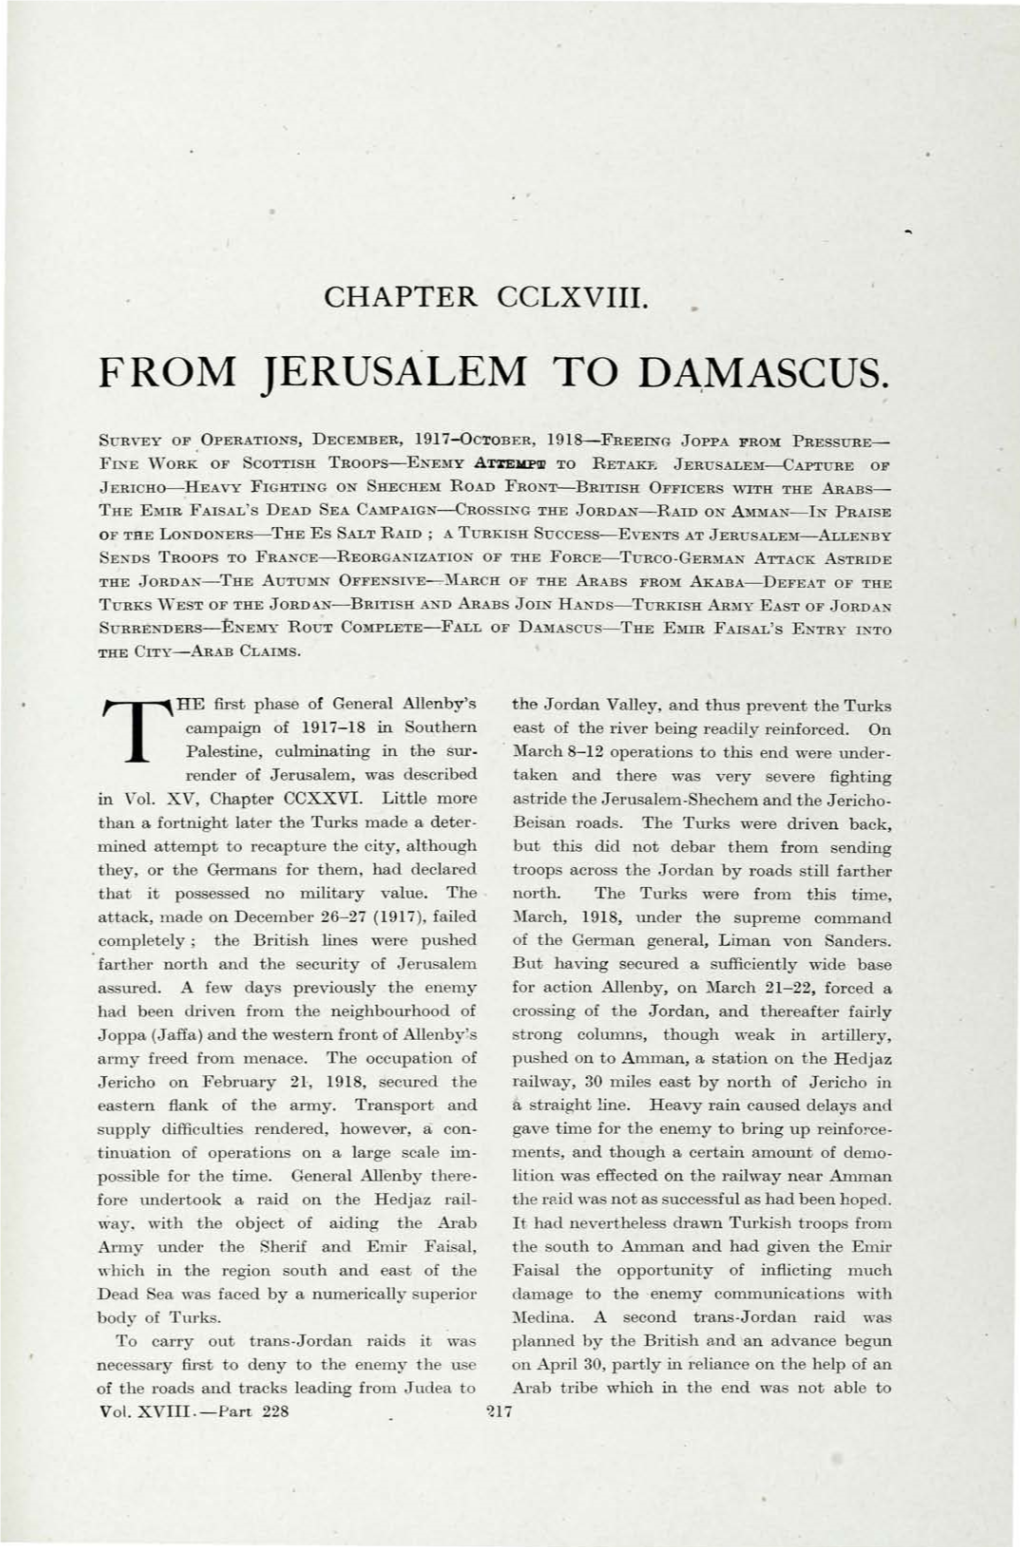 From Jerusalem to Da,Mascus